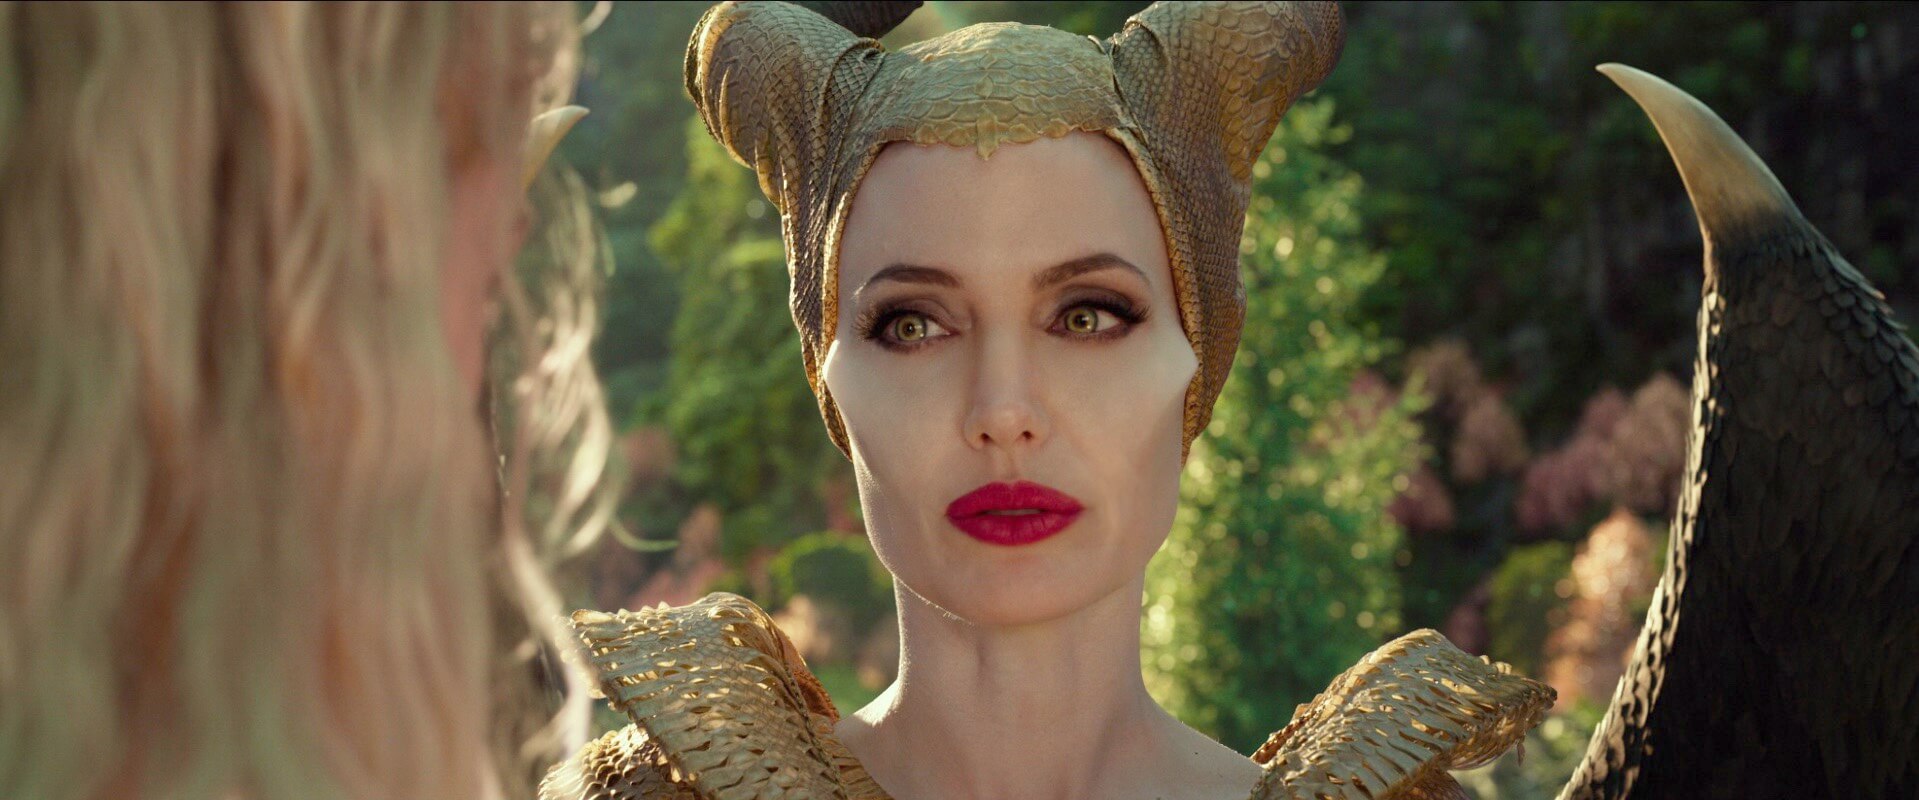 Brand New Trailer For ‘Maleficent: Mistress of Evil’ Released